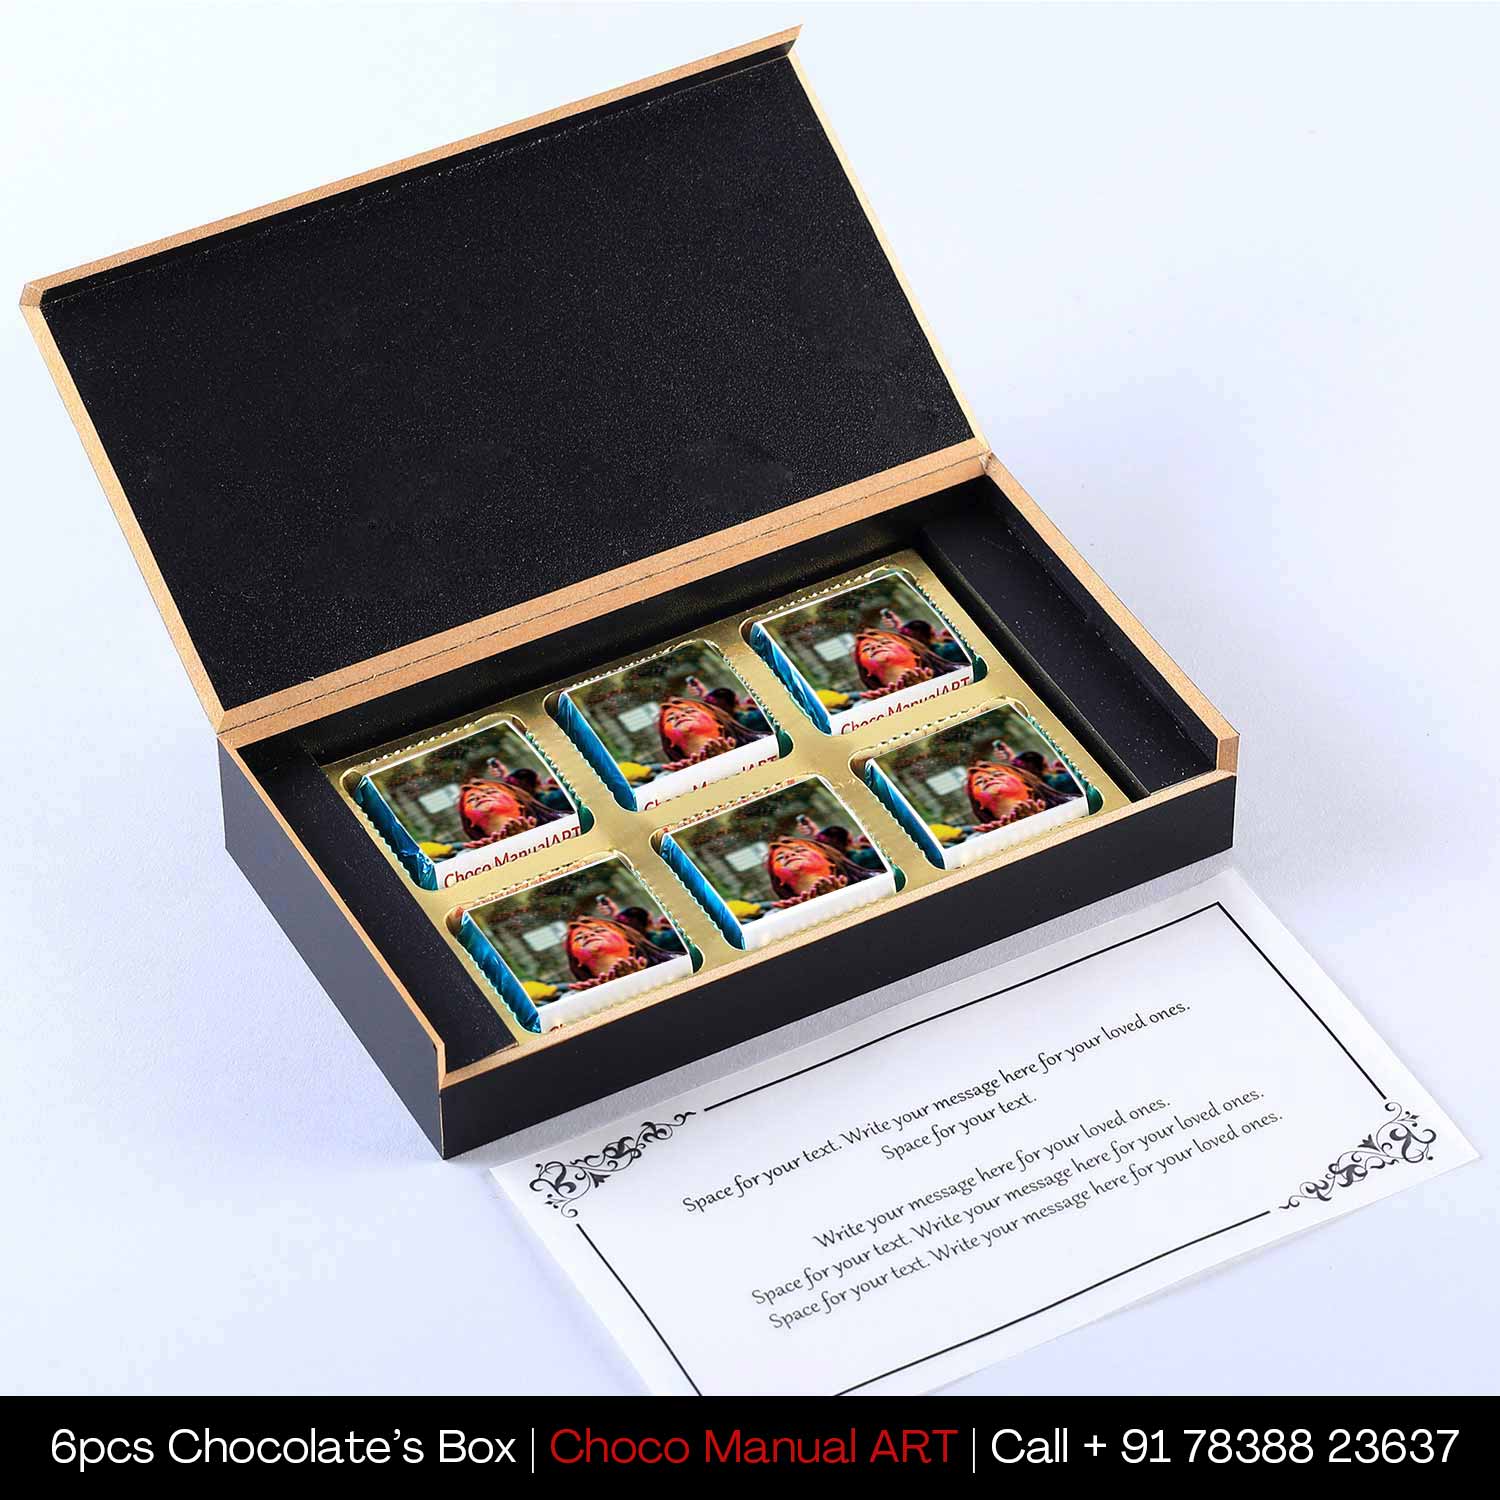 Vibrant colourful personalised holi gift of chocolates